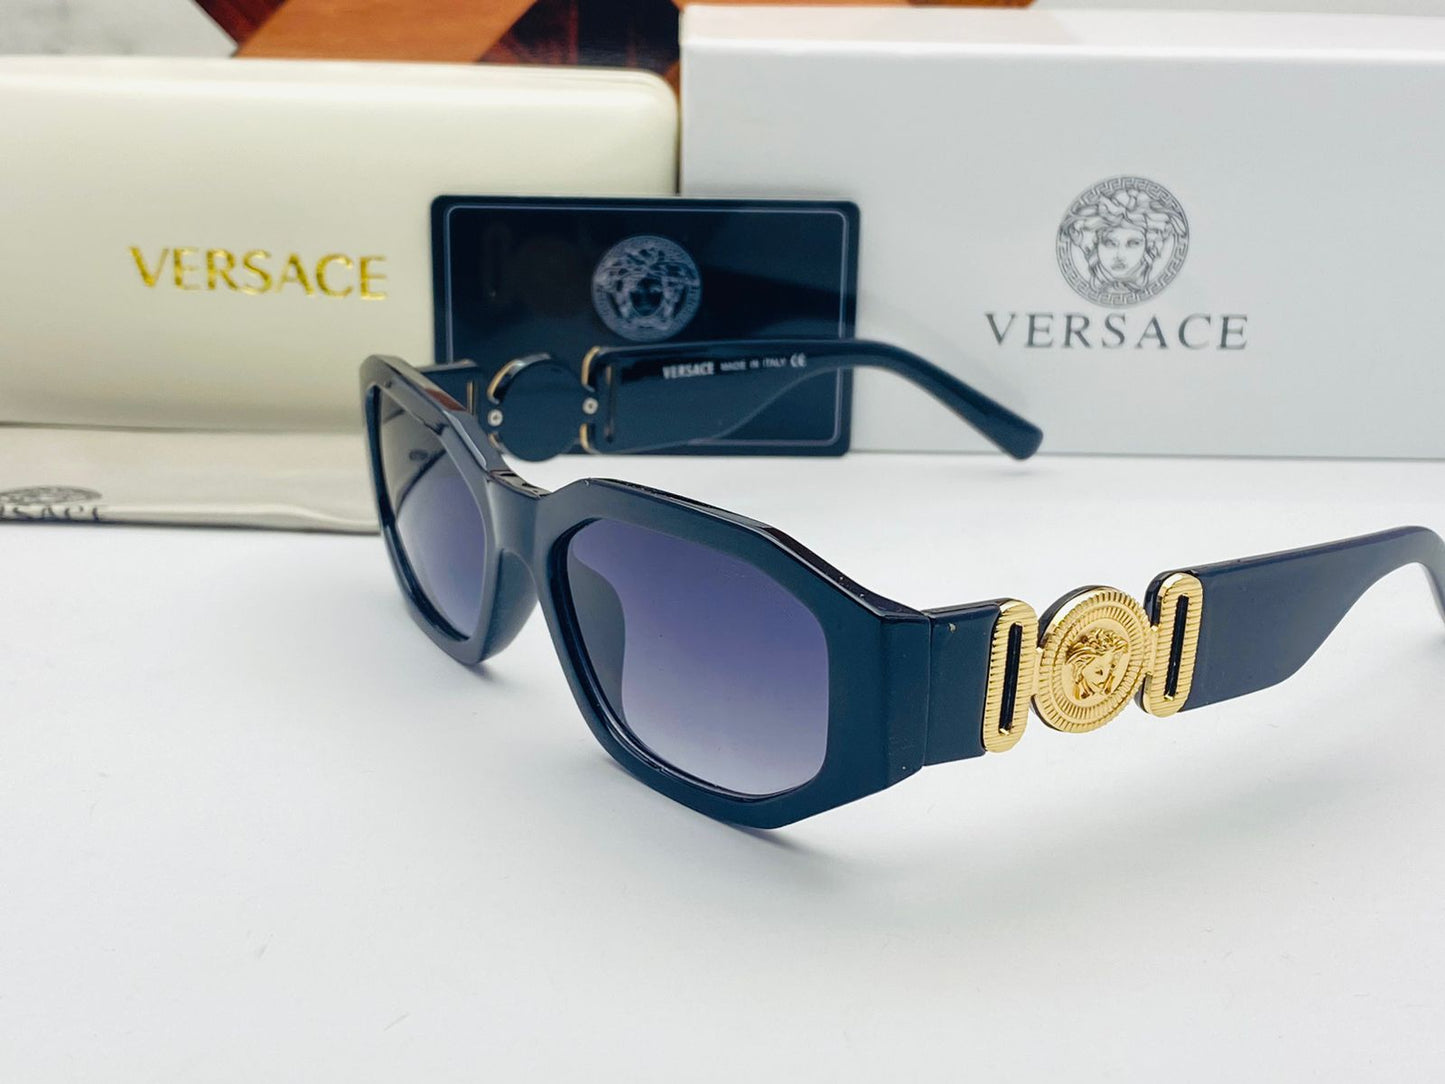 Versace fashionholic Sunglasses!